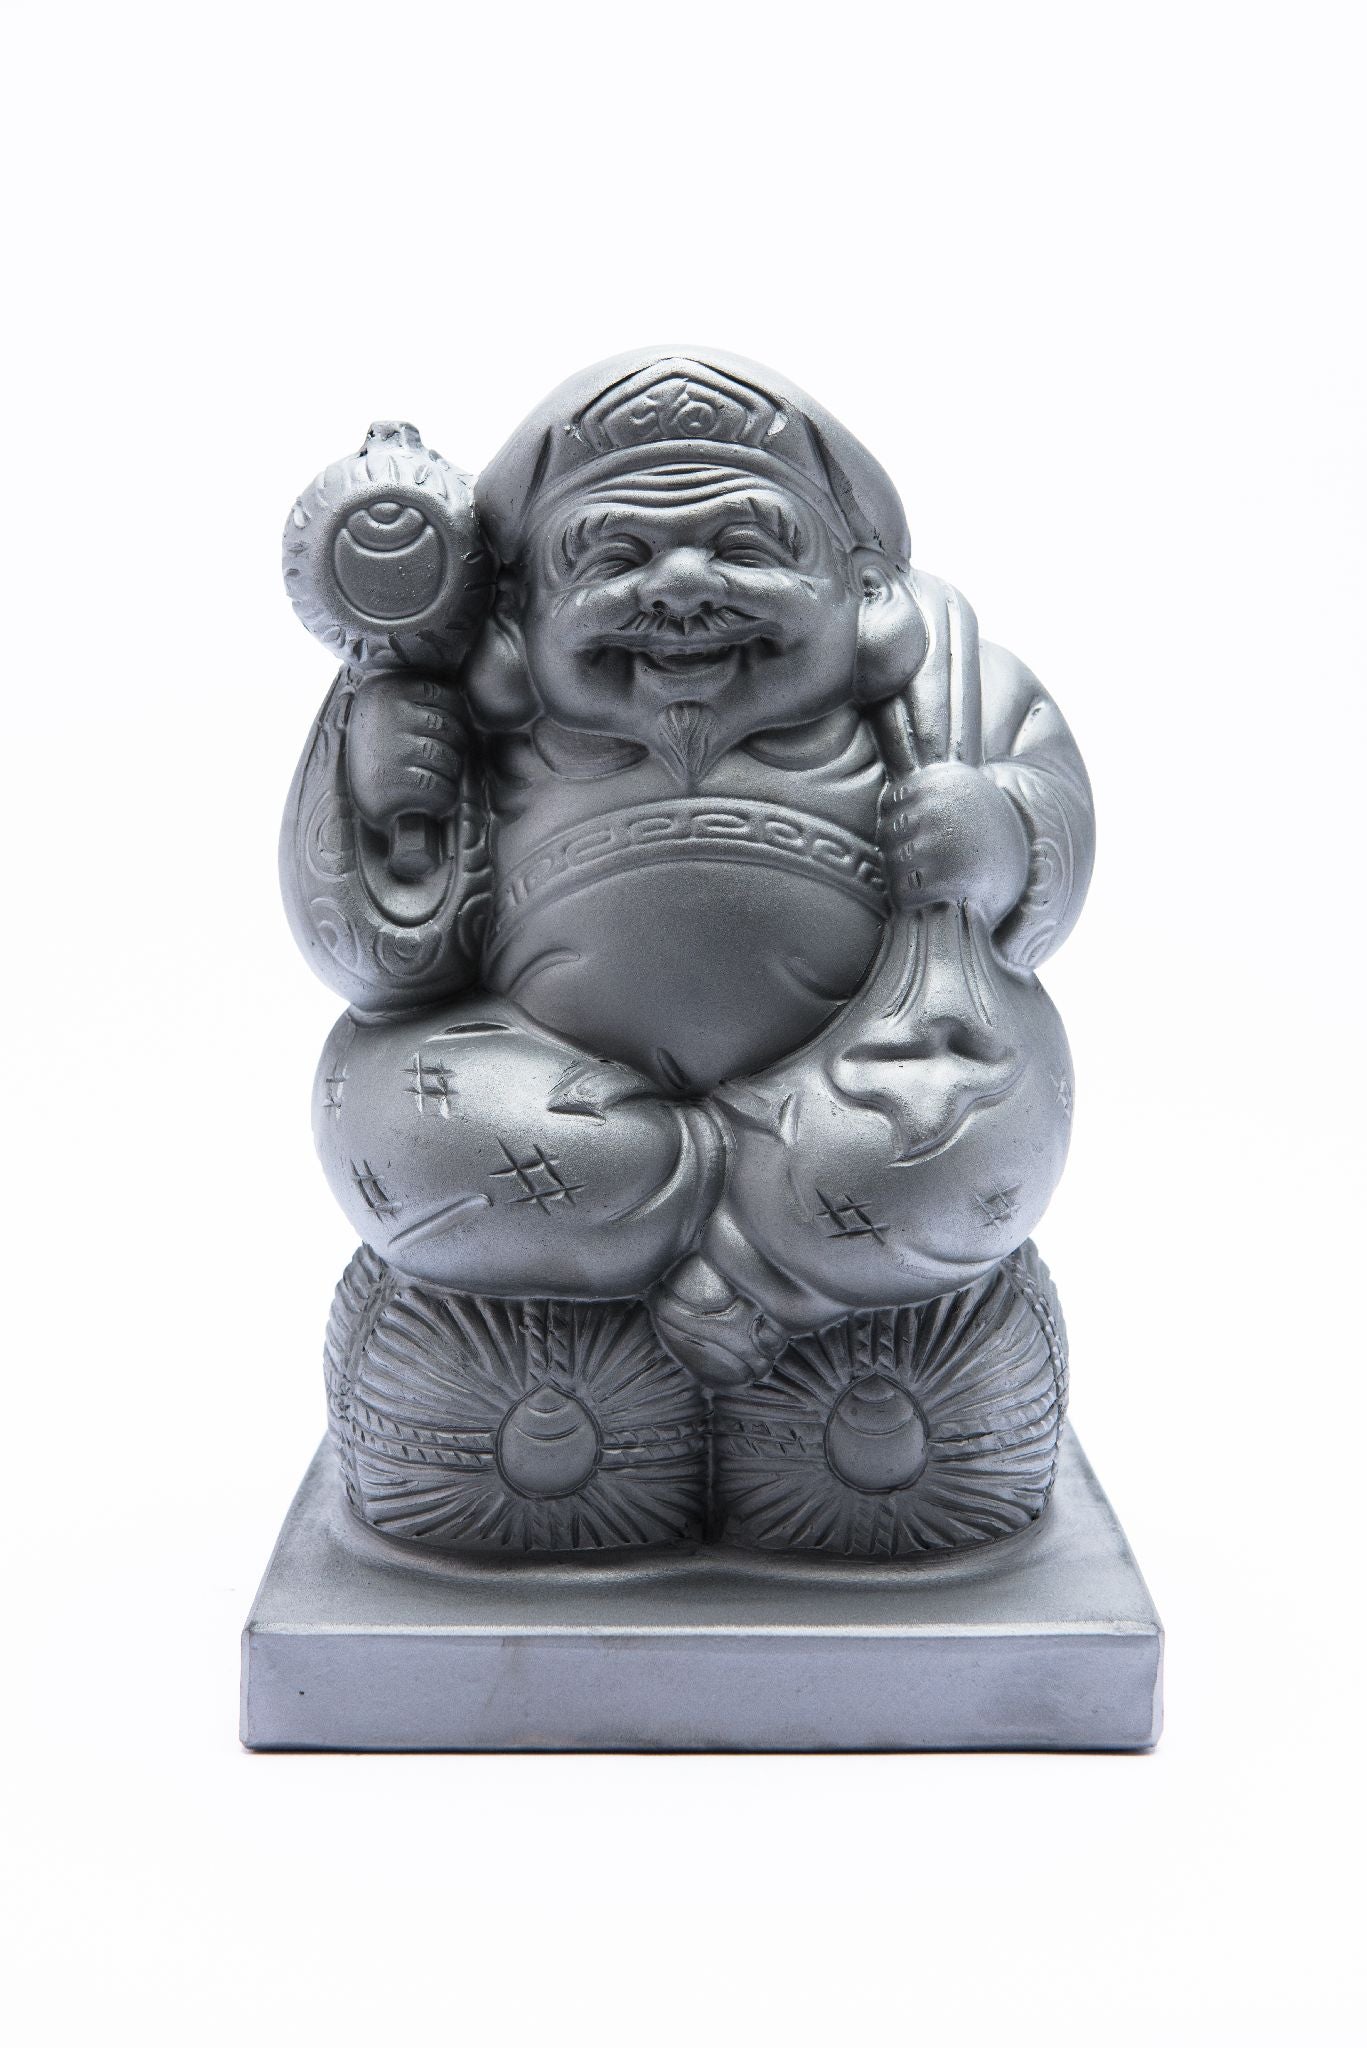 Japanese lucky god figure(Daikokuten) -Made of the ceramic-